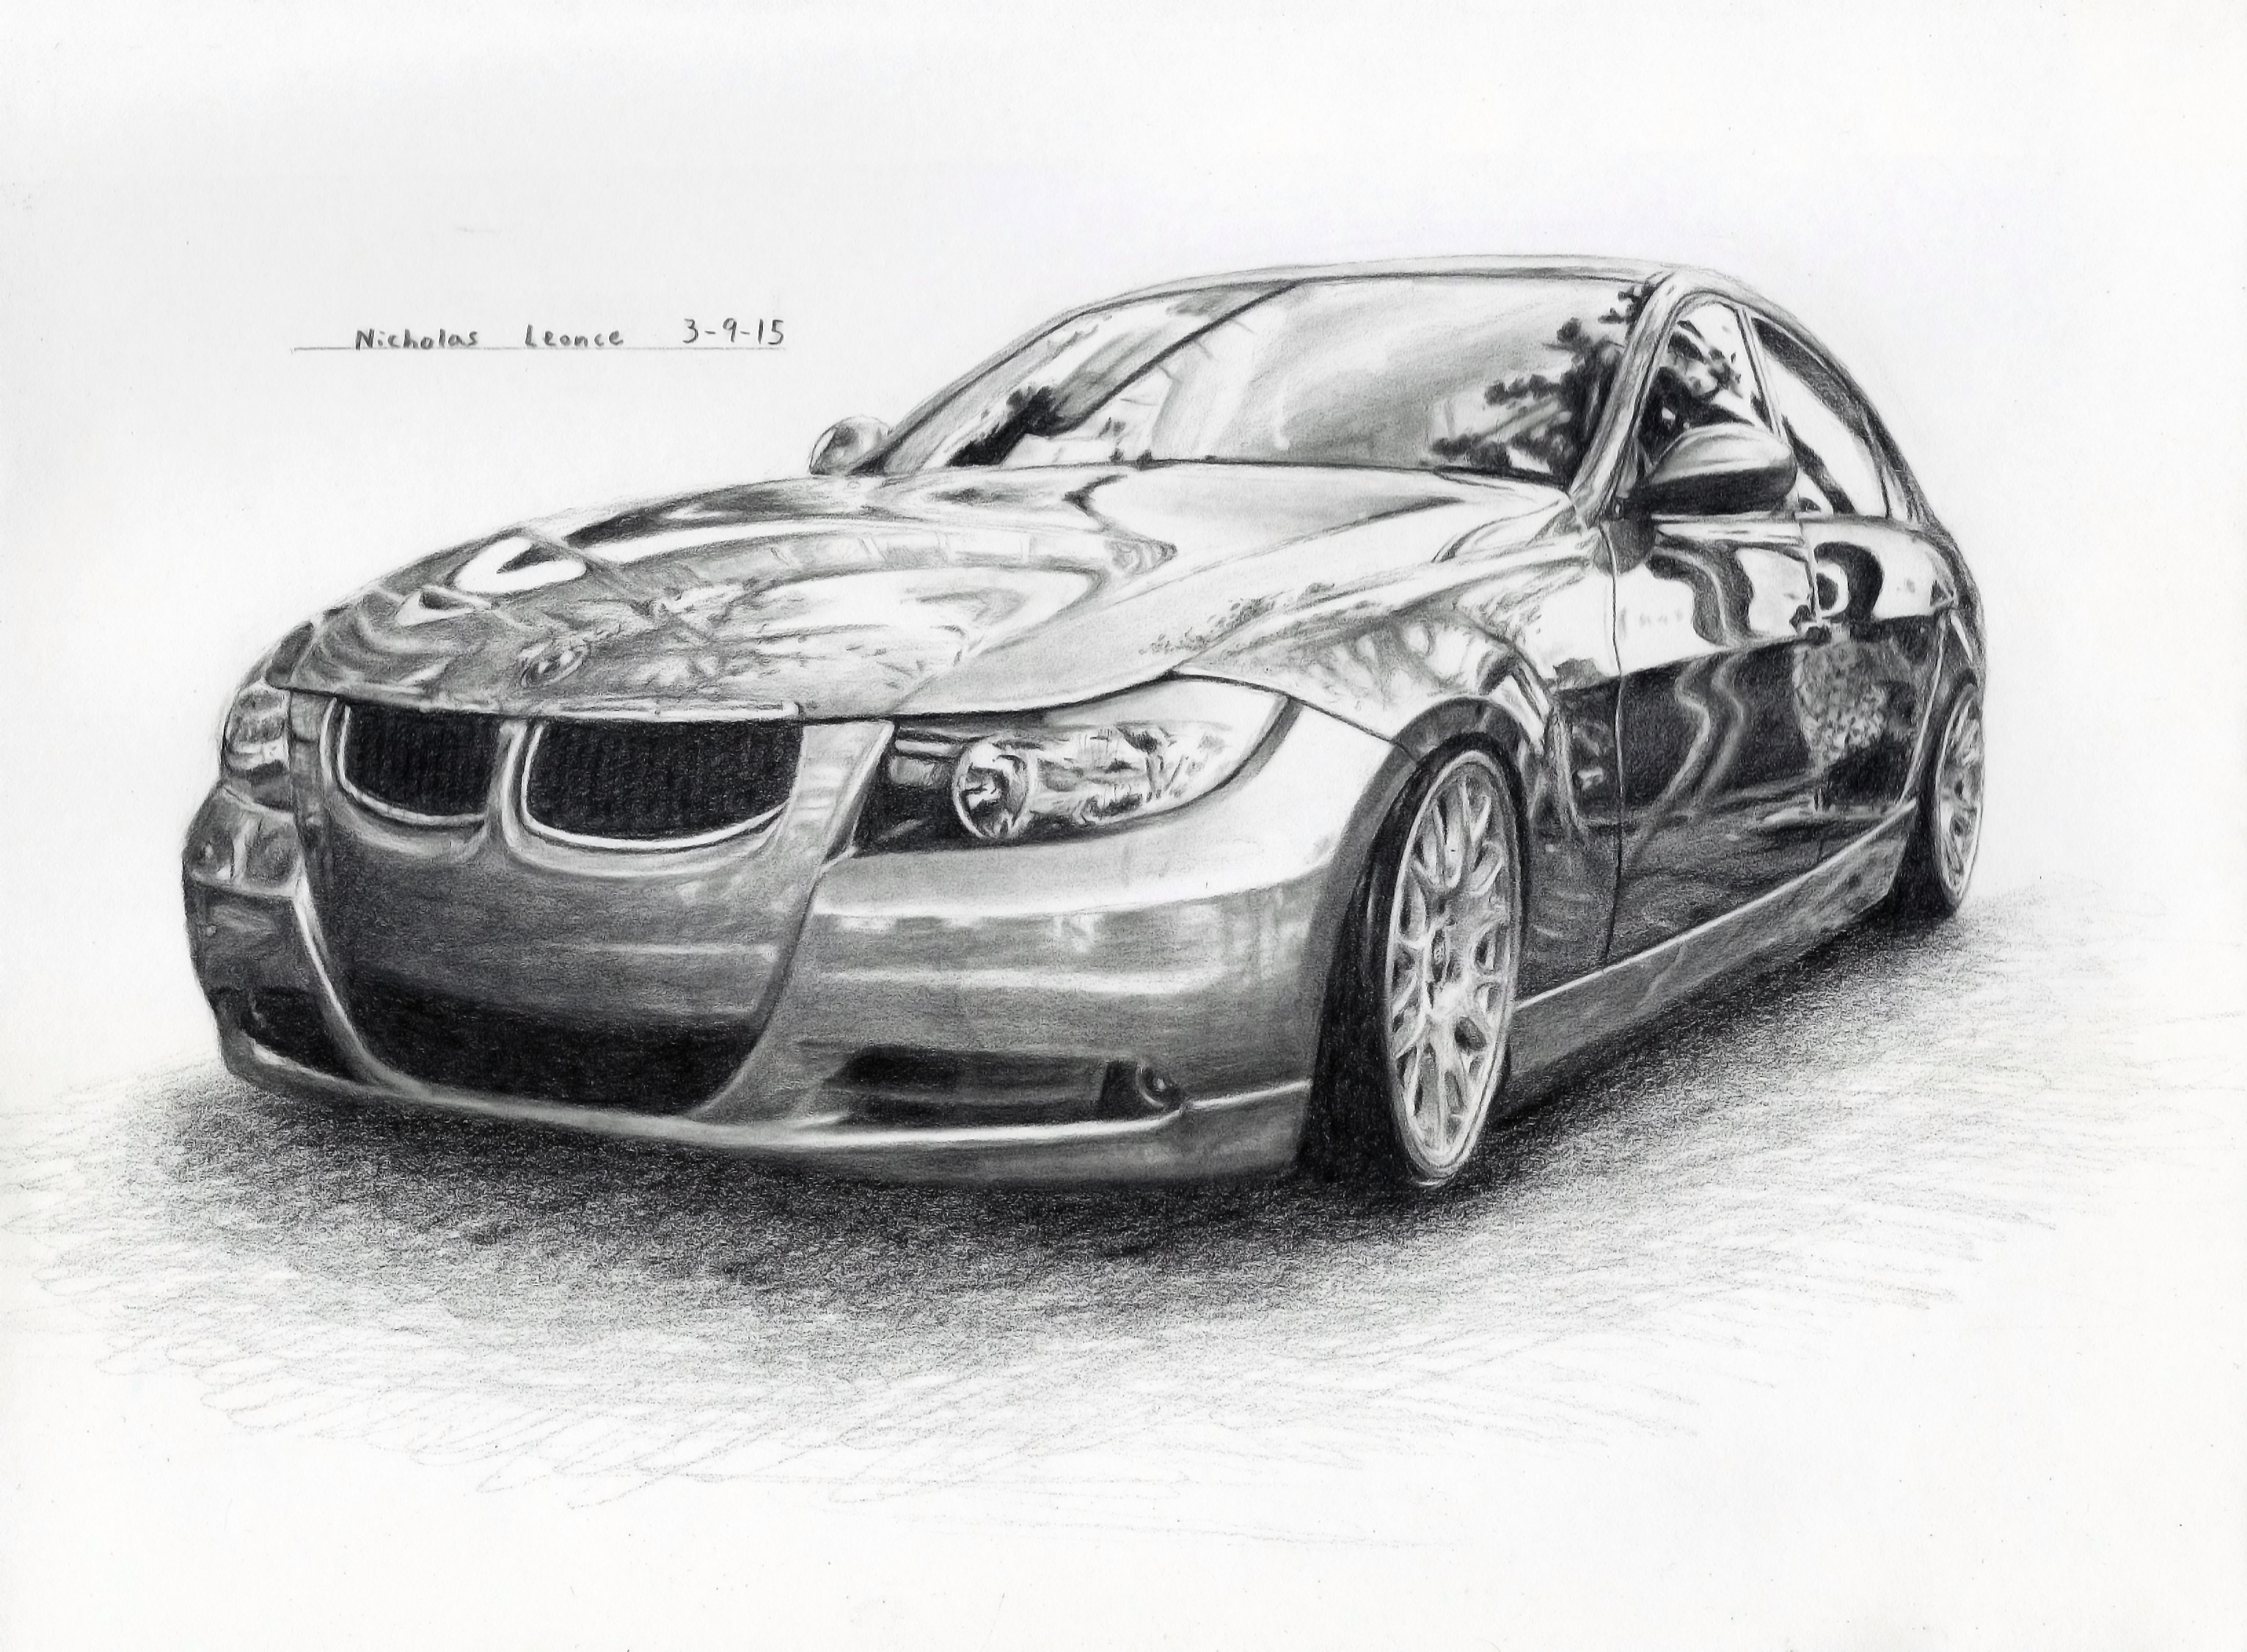 BMW Drawing Realistic